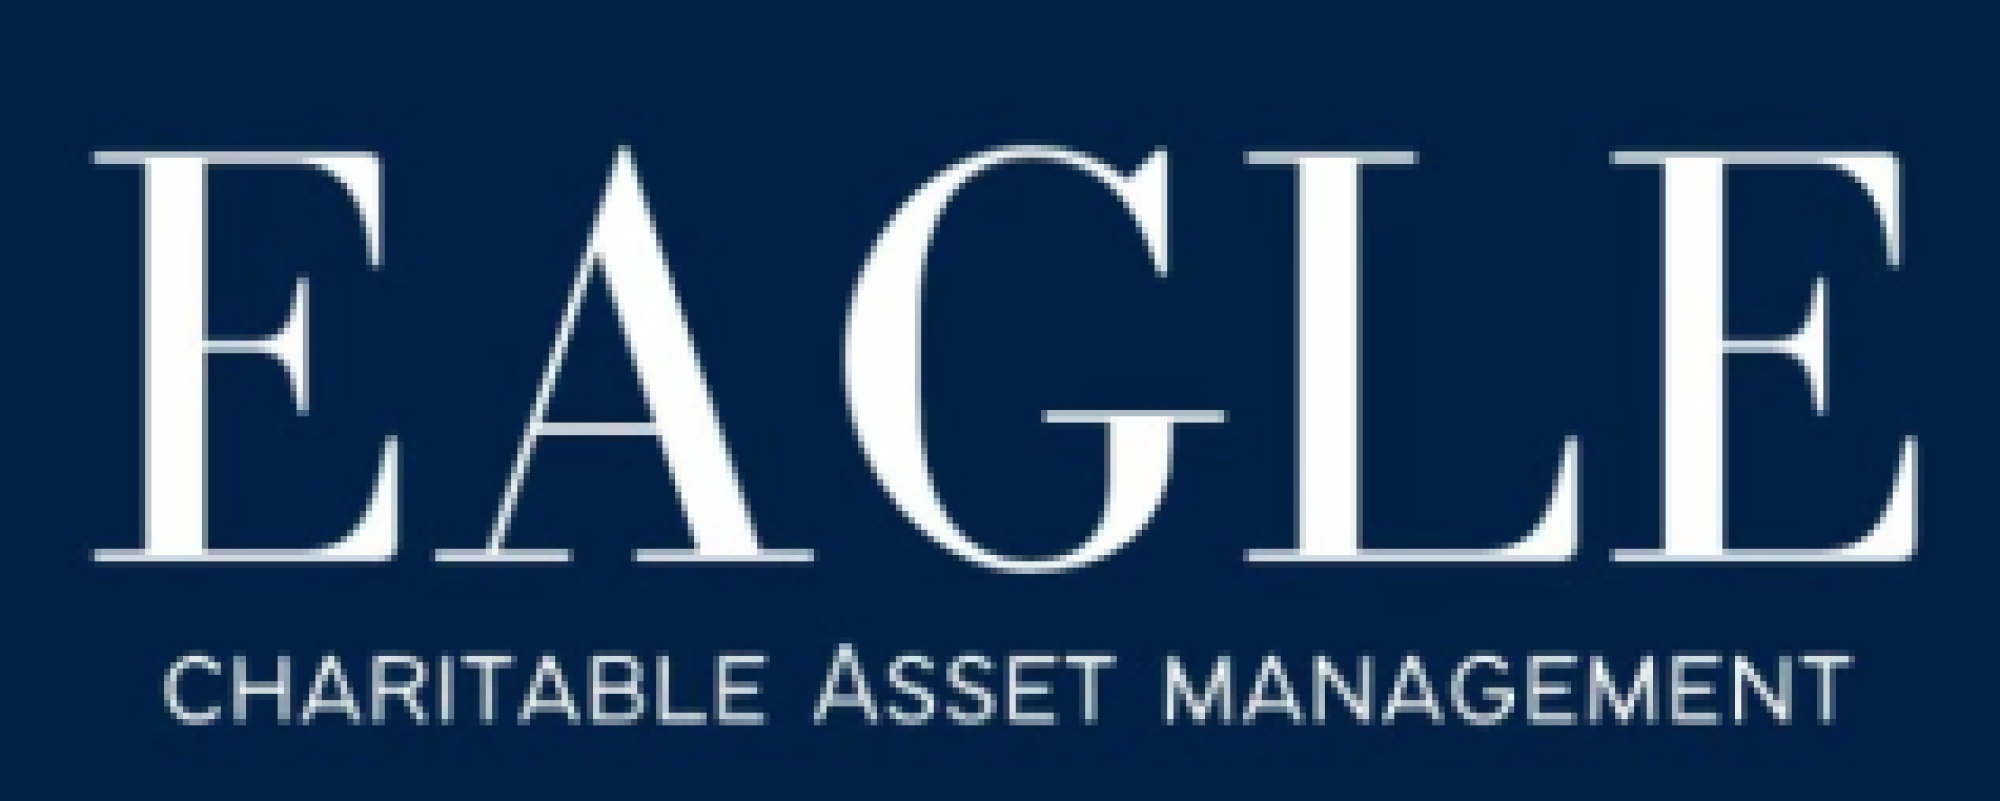 Eagle Charitable Asset Management